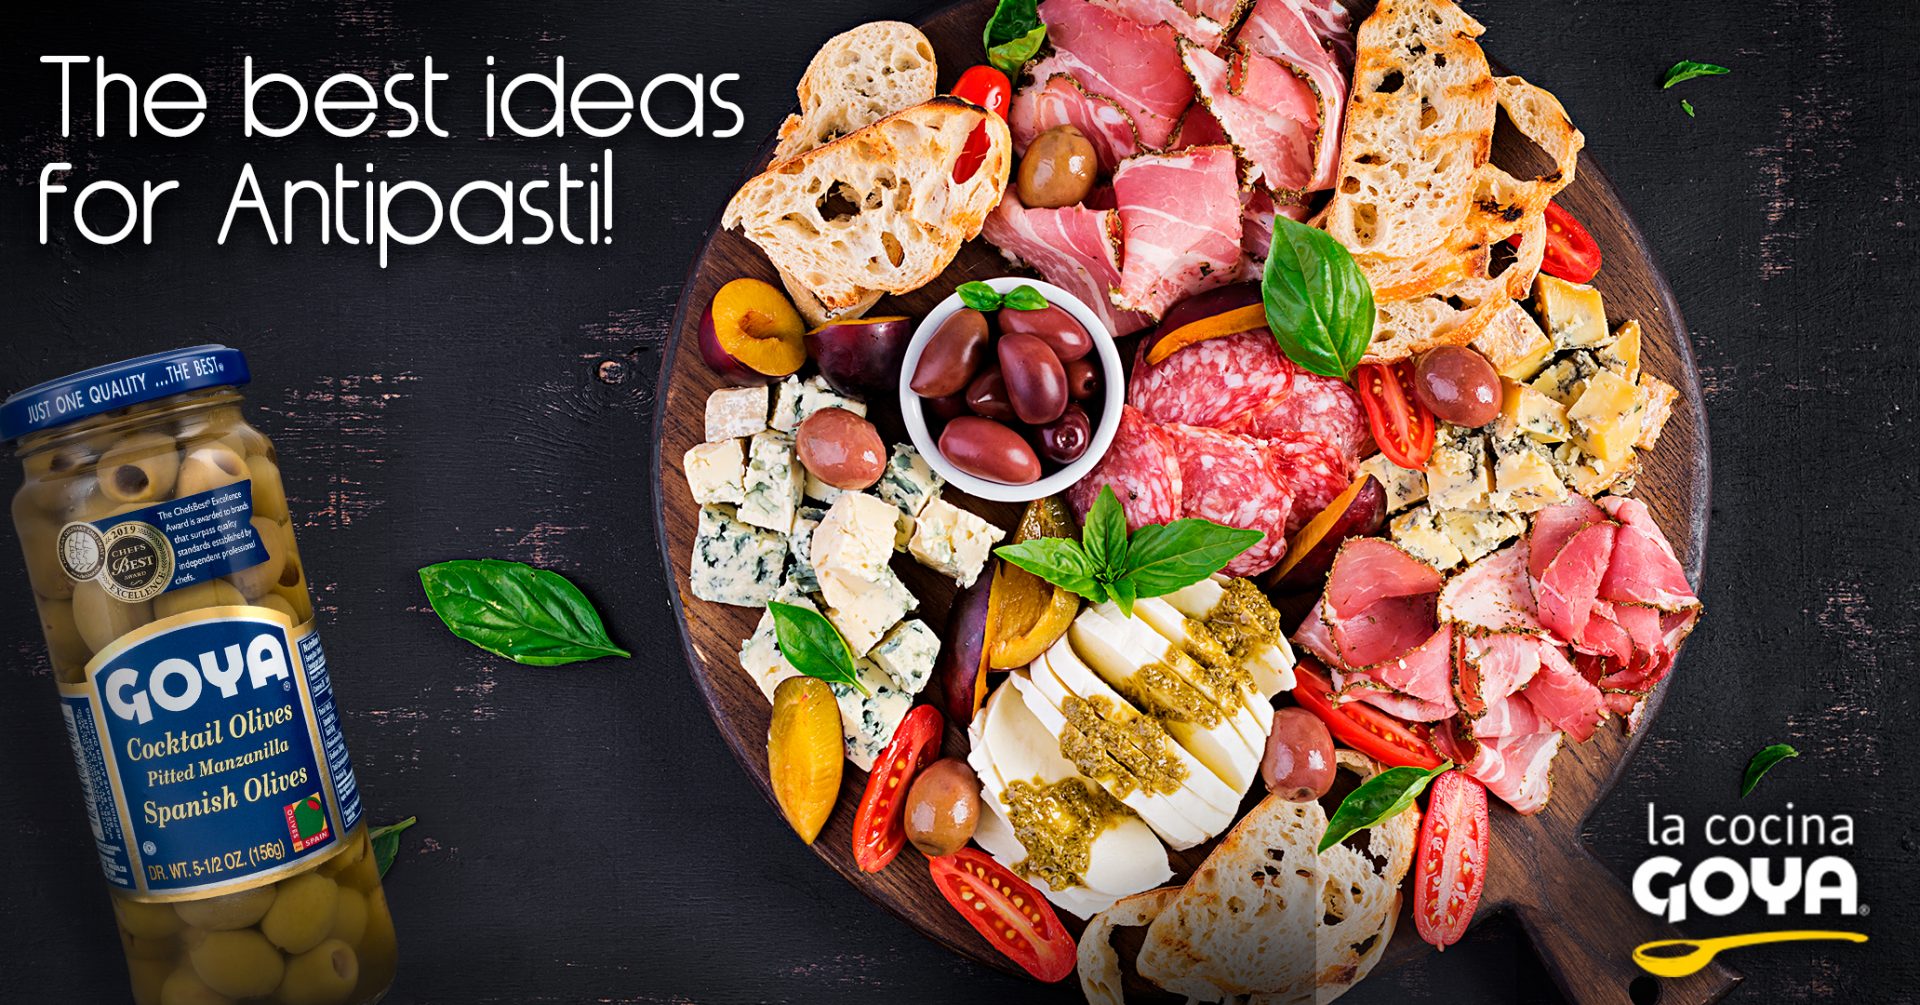 The best ideas for Antipasti!